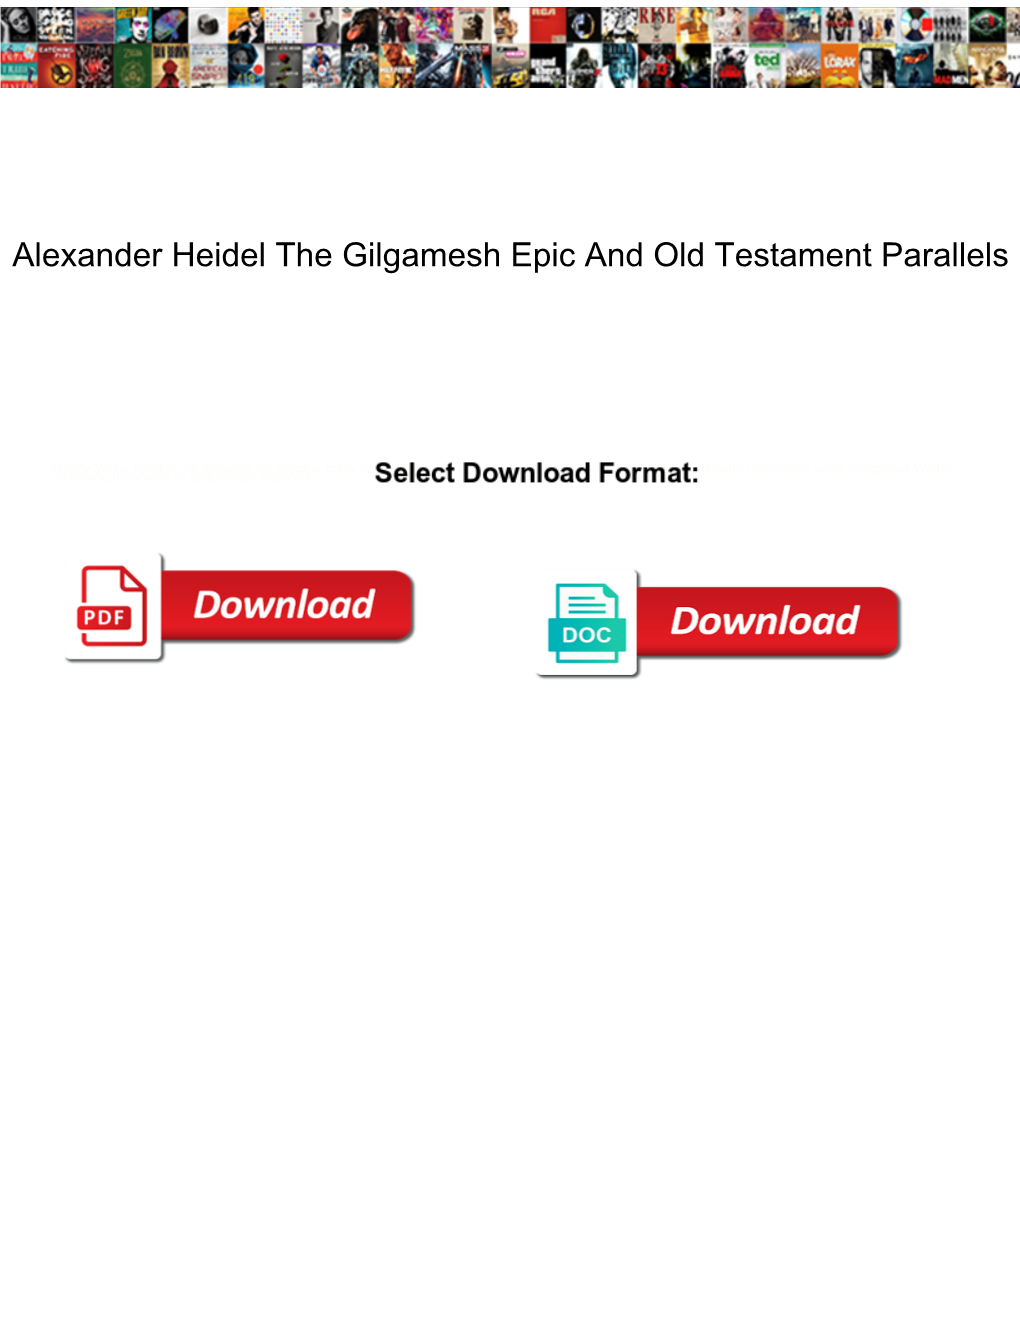 Alexander Heidel the Gilgamesh Epic and Old Testament Parallels